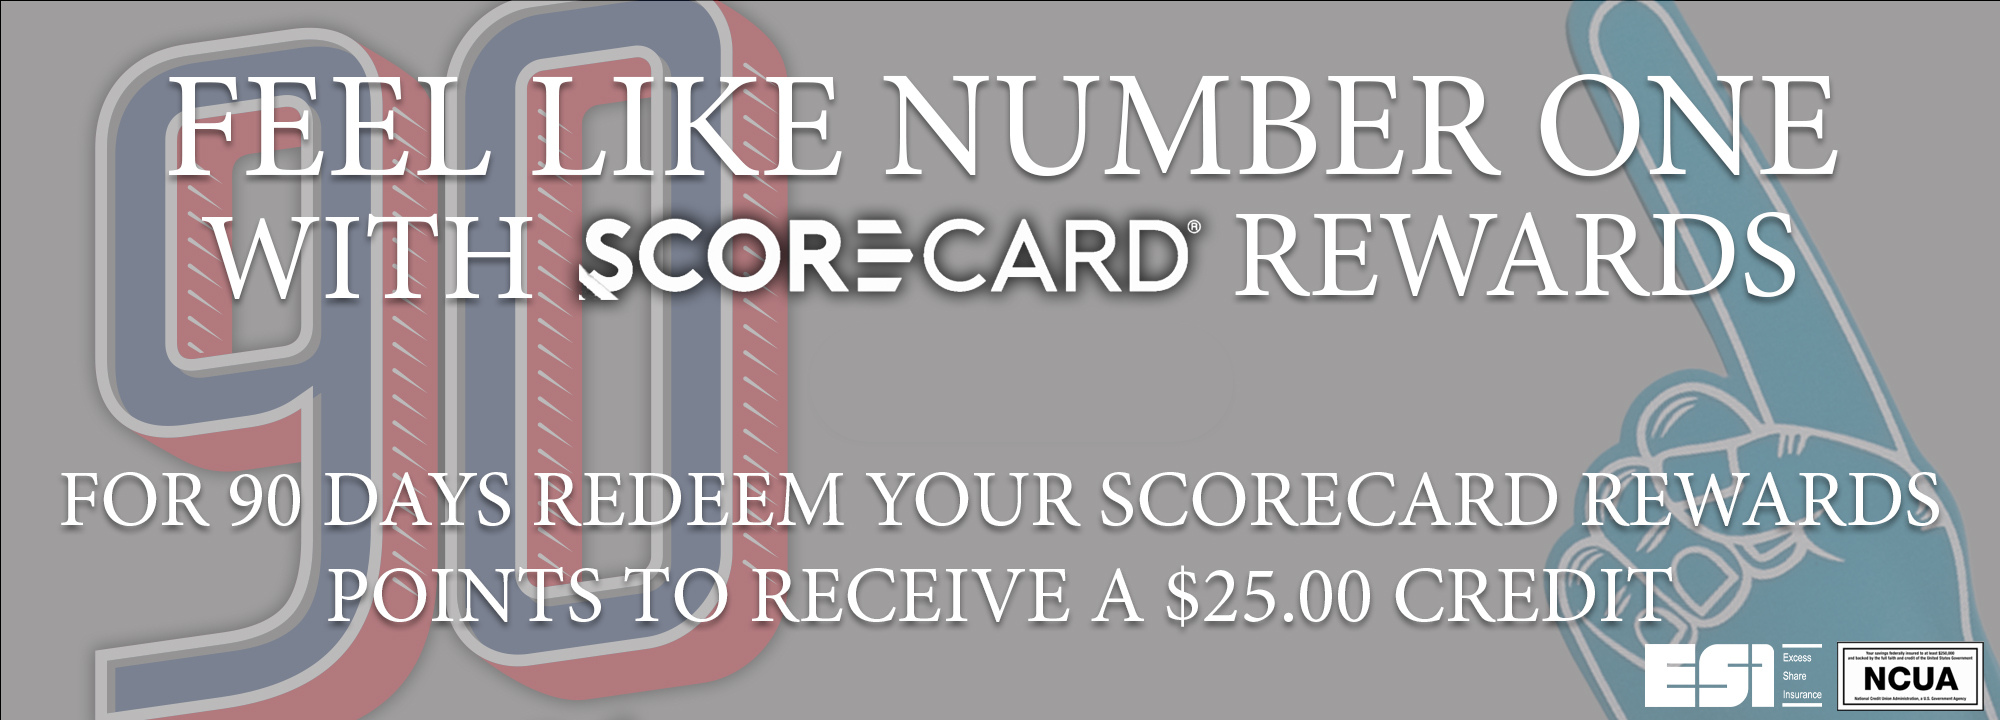 Feel like number one with ScoreCard Rewards. Click here to visit scorecardrewards.com. For 90 days redeem your ScoreCard rewards points to receive a $25.00 credit.